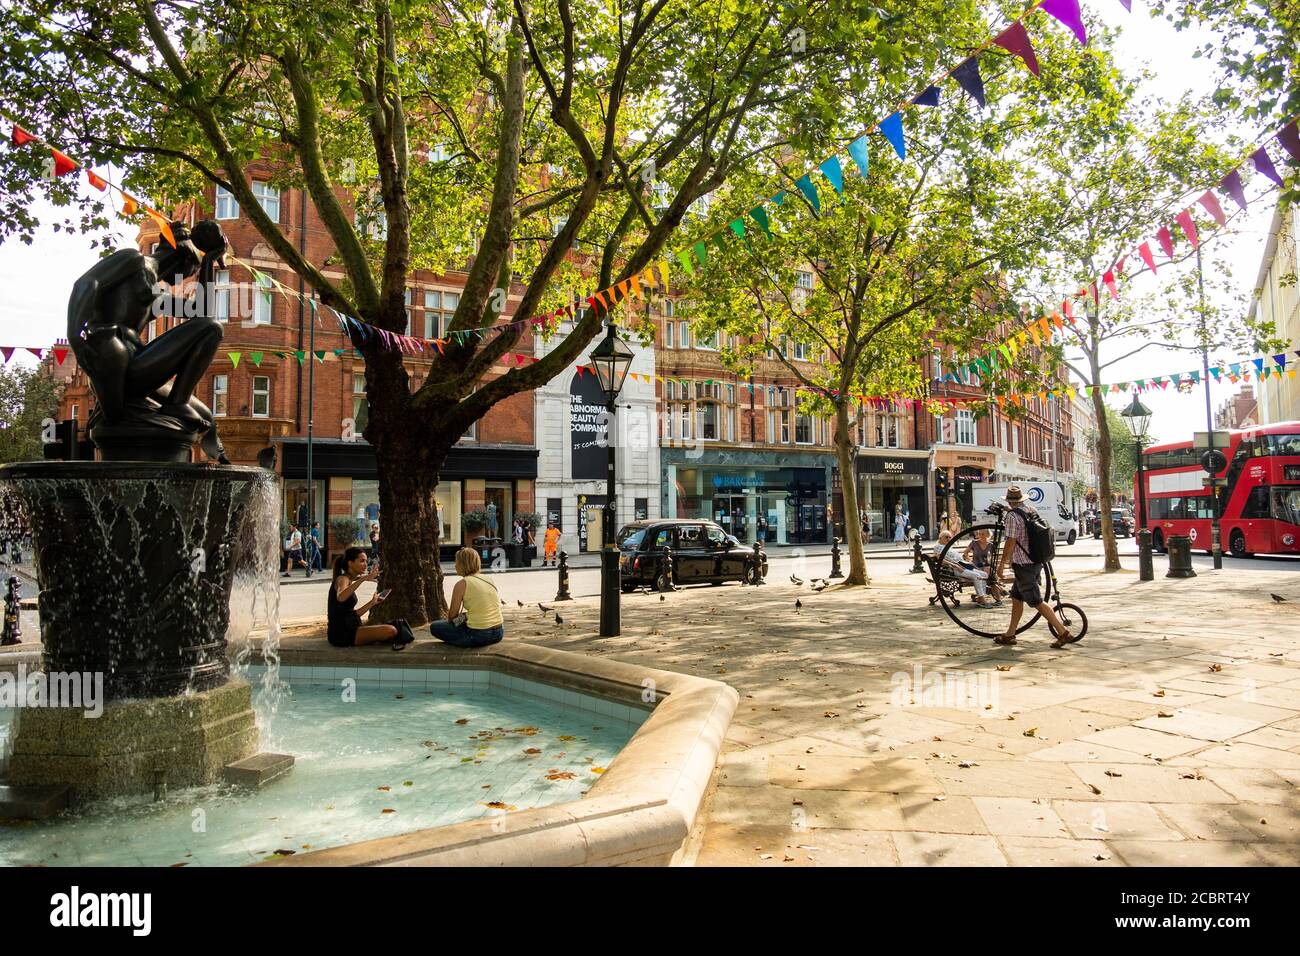 London- August, 2020: Sloane Square in Chelsea / Knightsbridge area of west London Stock Photo